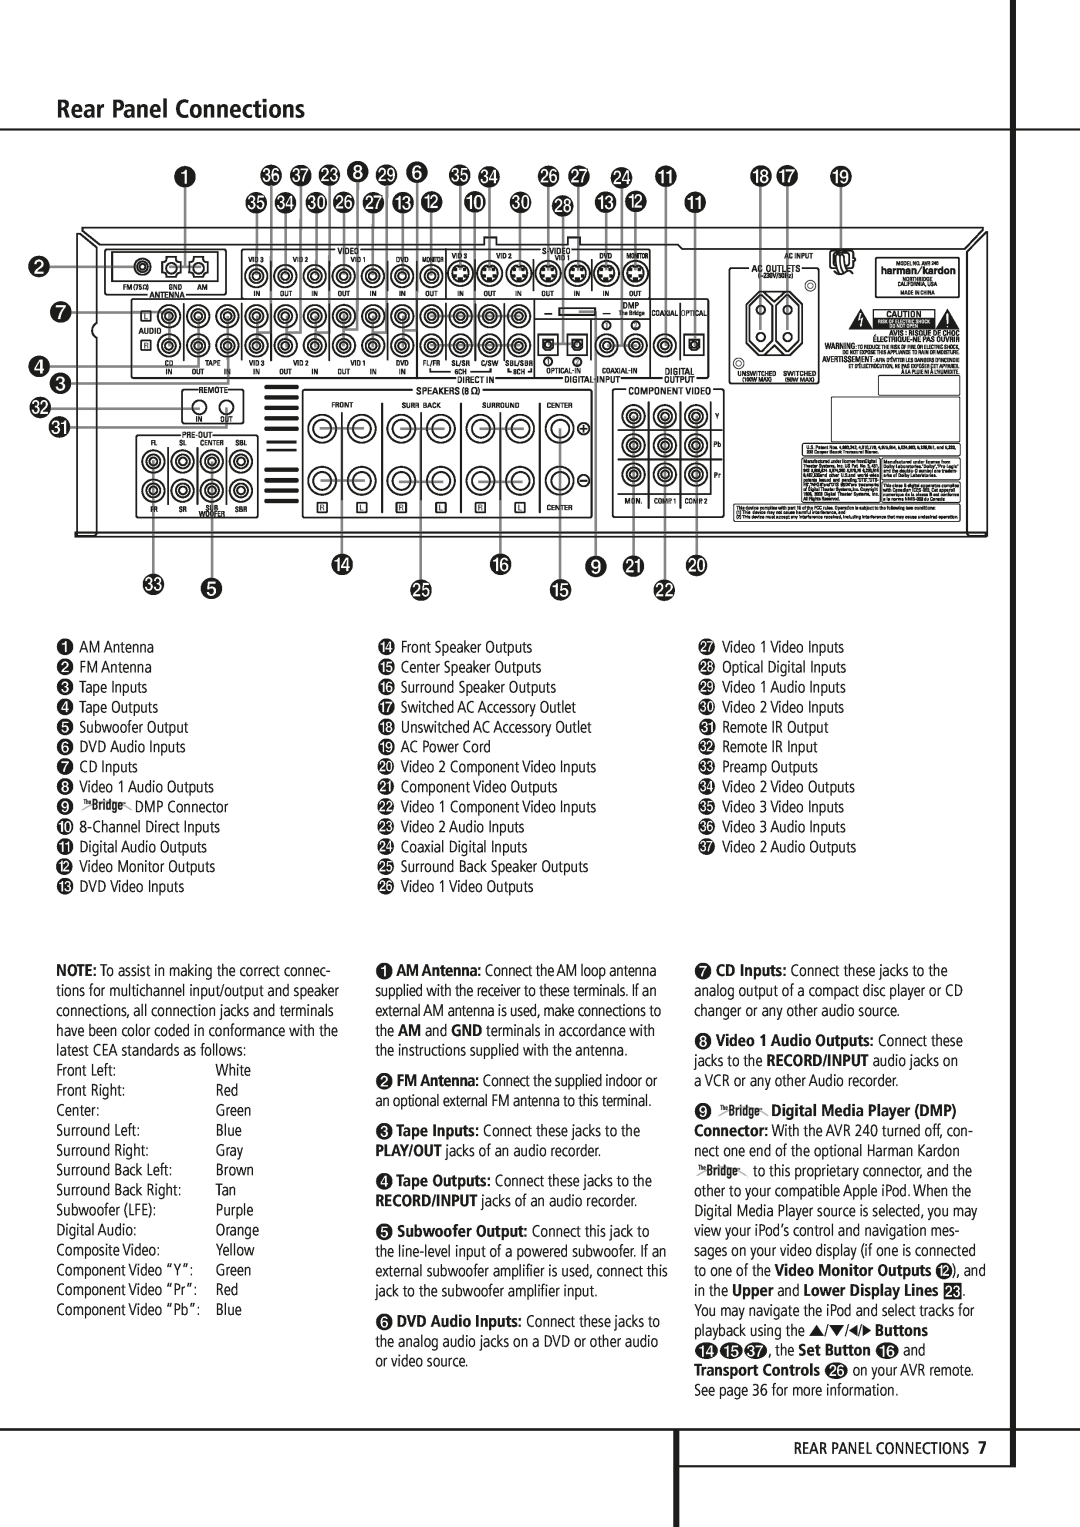 Harman-Kardon AVR 240 owner manual Rear Panel Connections 